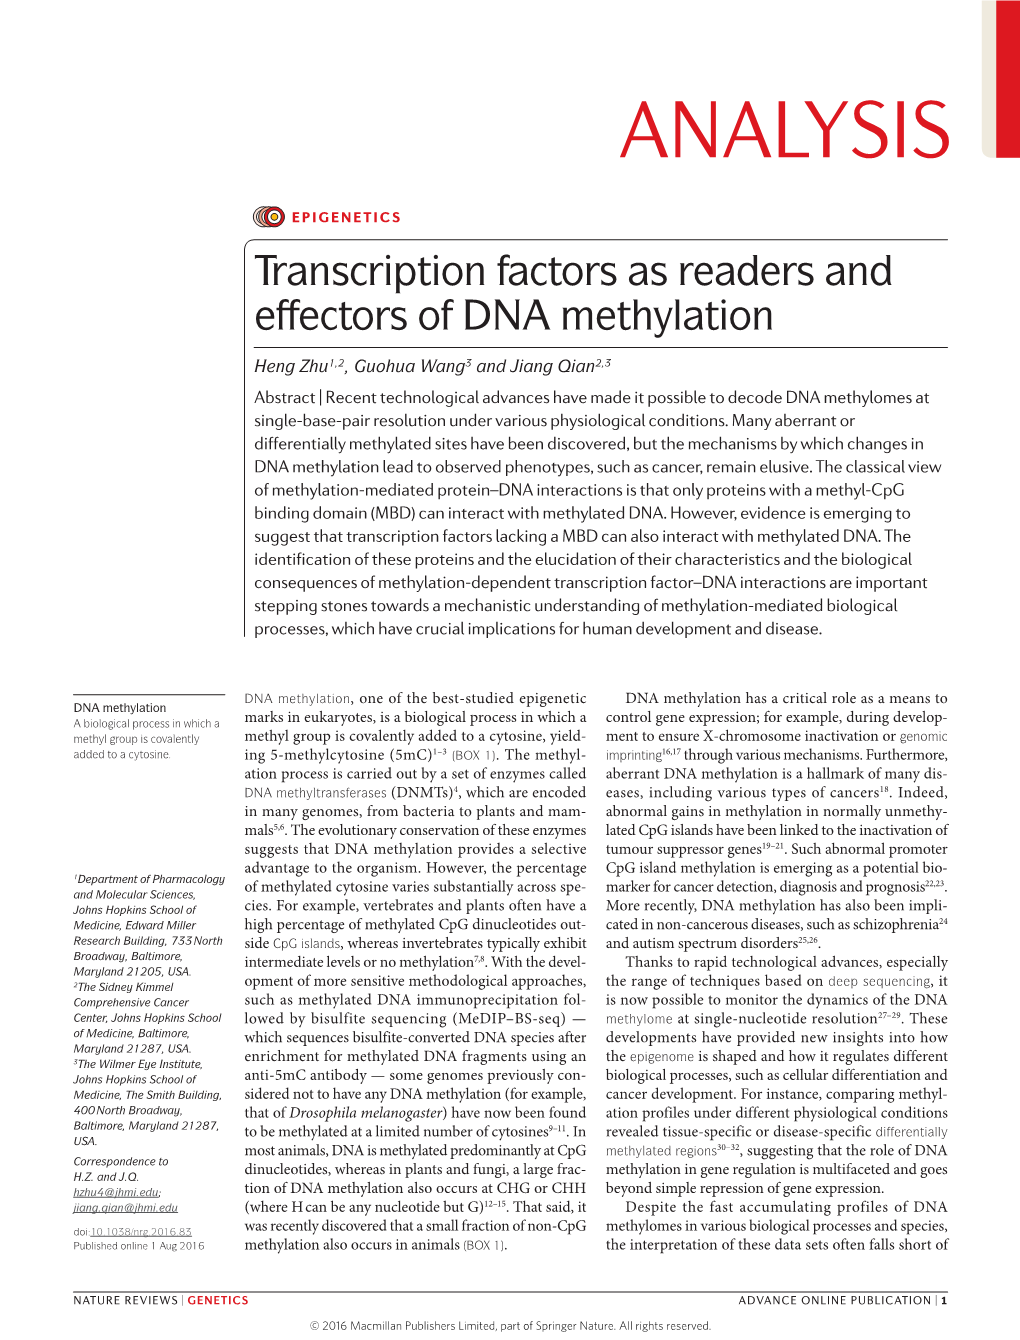 Transcription Factors As Readers and Effectors of DNA Methylation